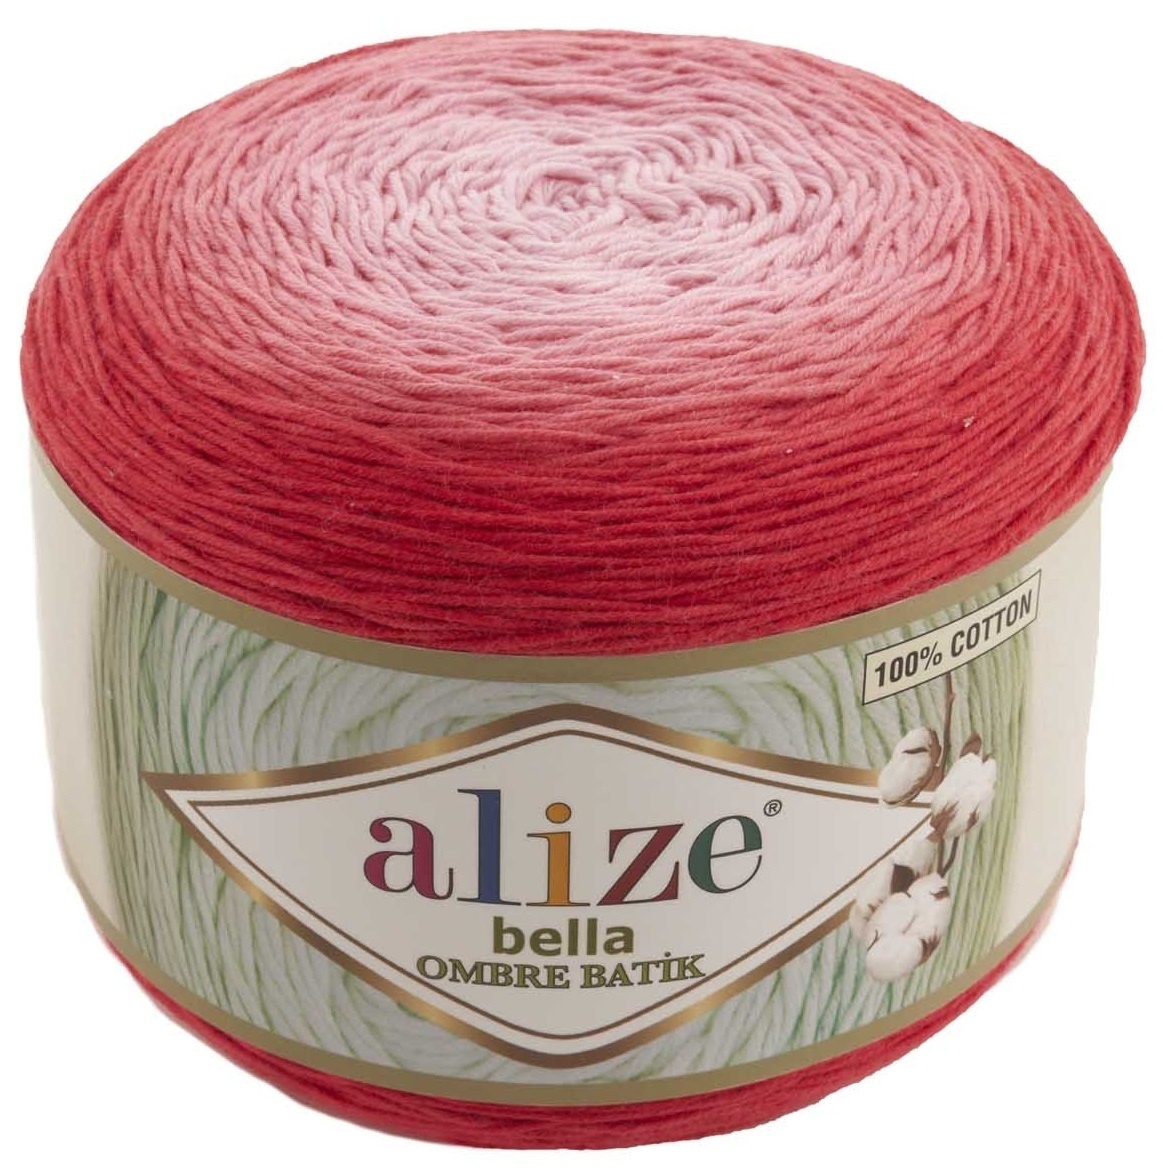 Alize Bella Ombre Batik 100% cotton, 2 Skein Value Pack, 500g фото 3